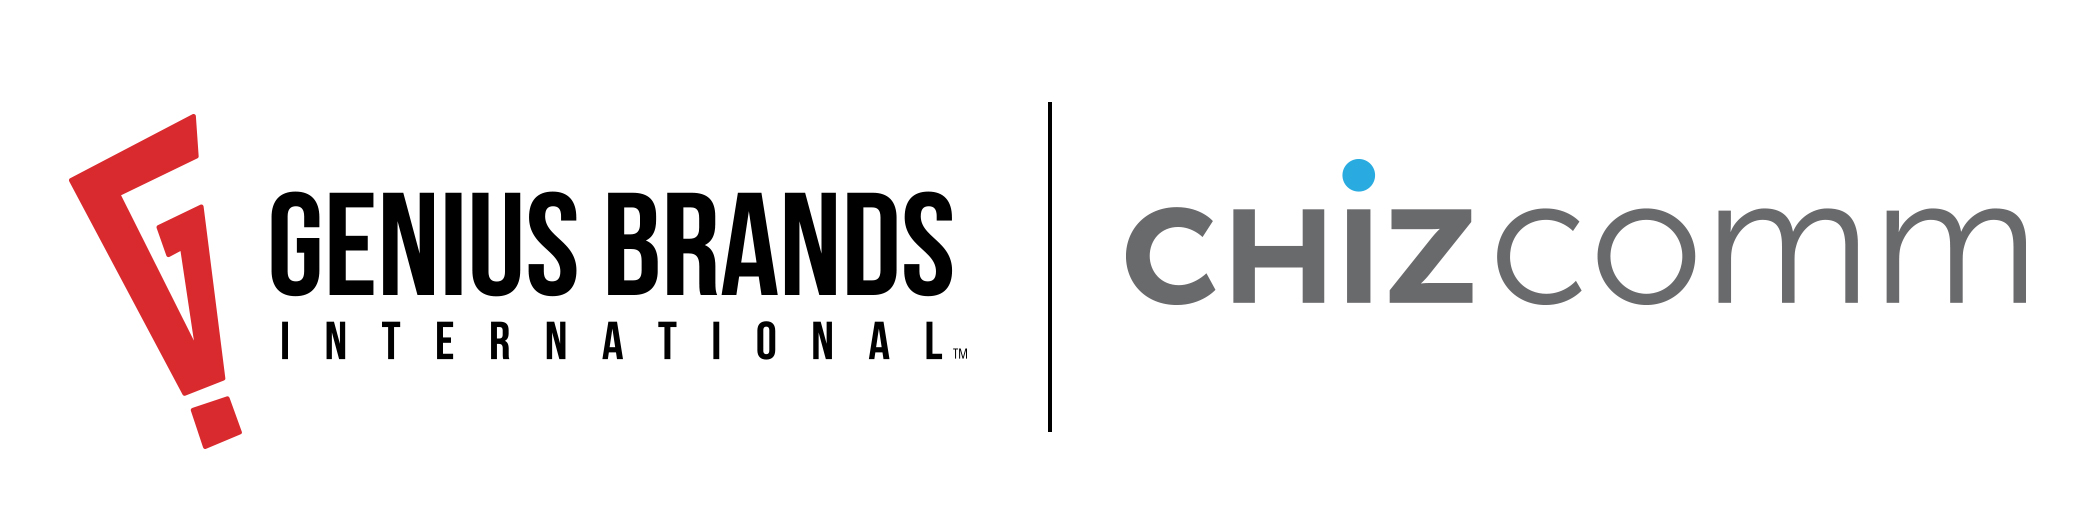 Genius Brands International, Inc. and CHIZCOMM LTD. 